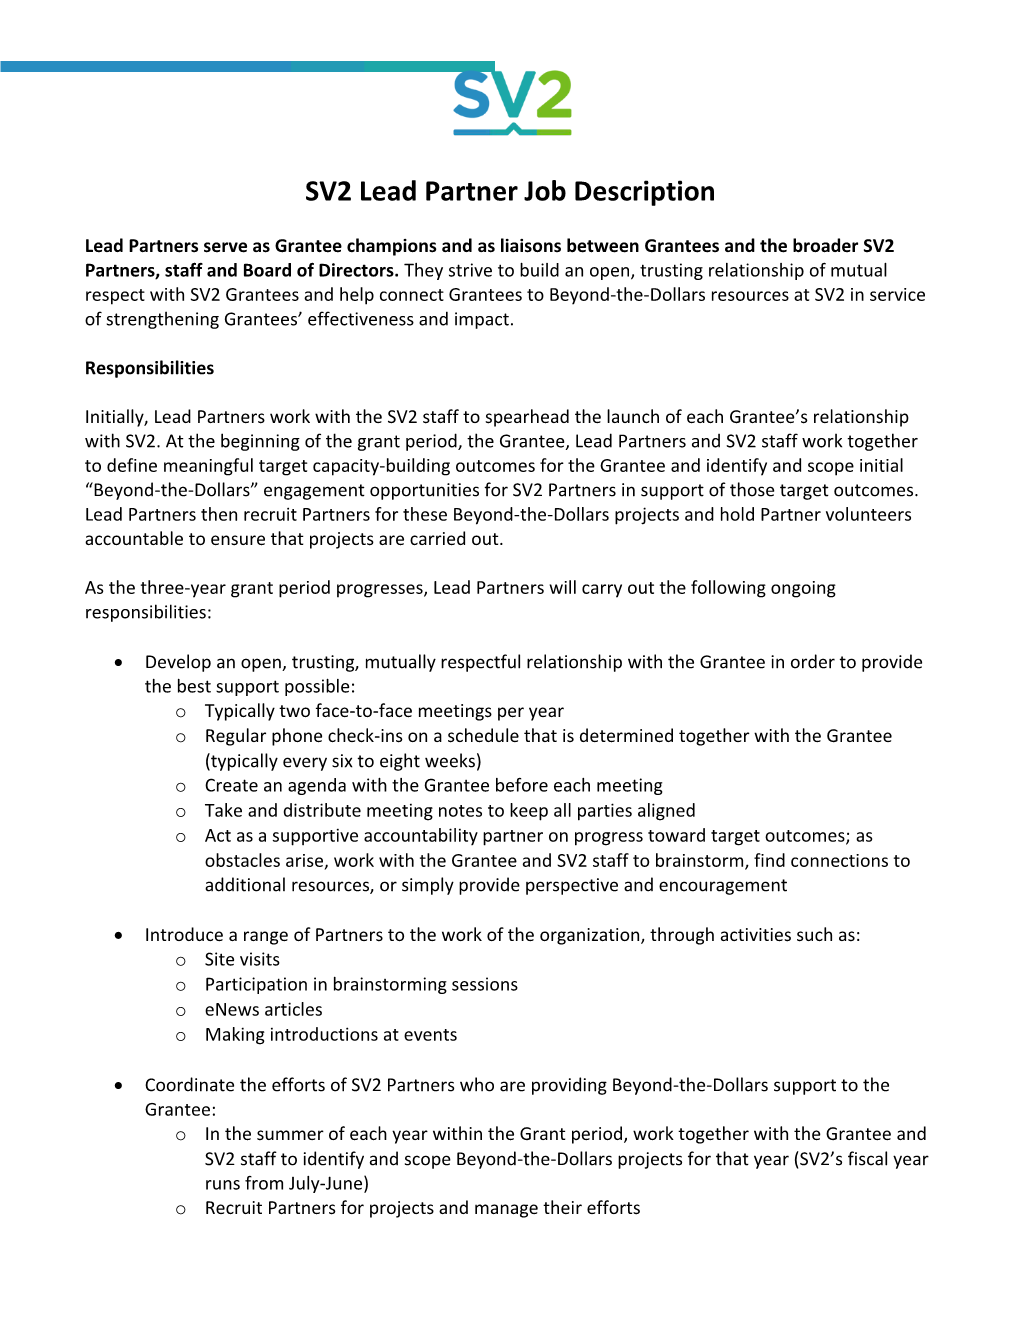 SV2 Lead Partner Job Description